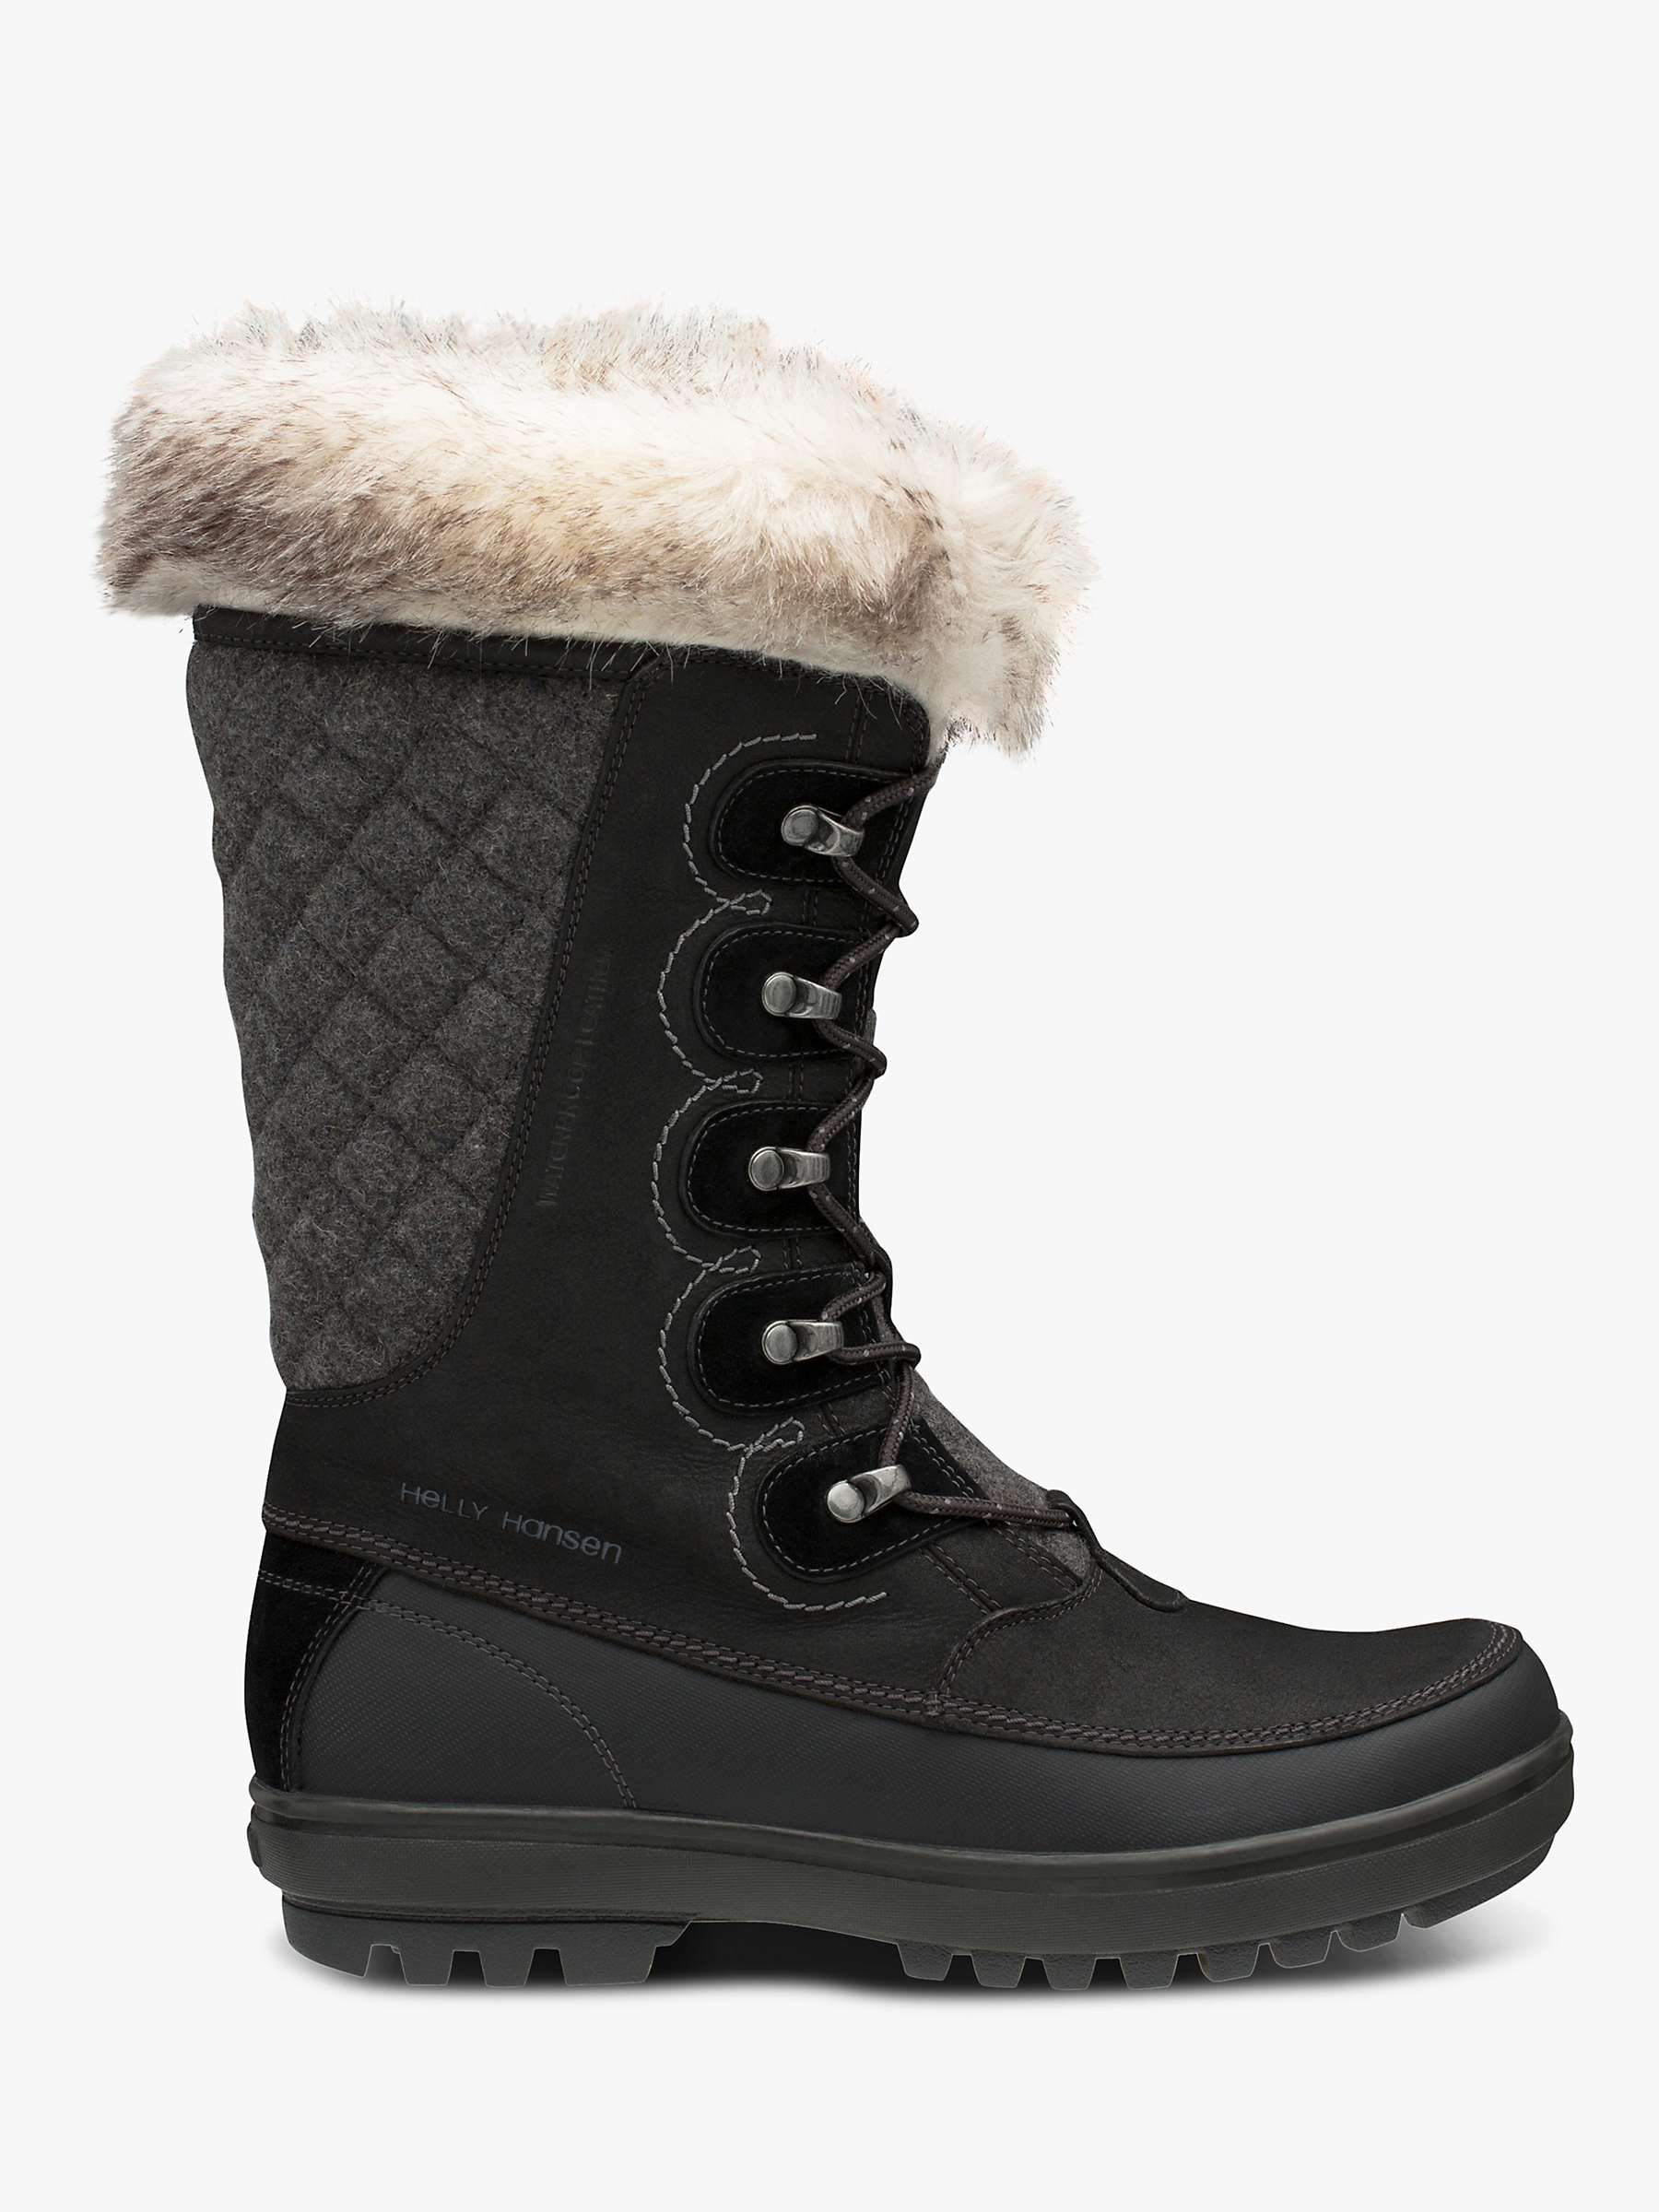 Buy Helly Hansen Garibaldi VL Women's Snow Boots Online at johnlewis.com